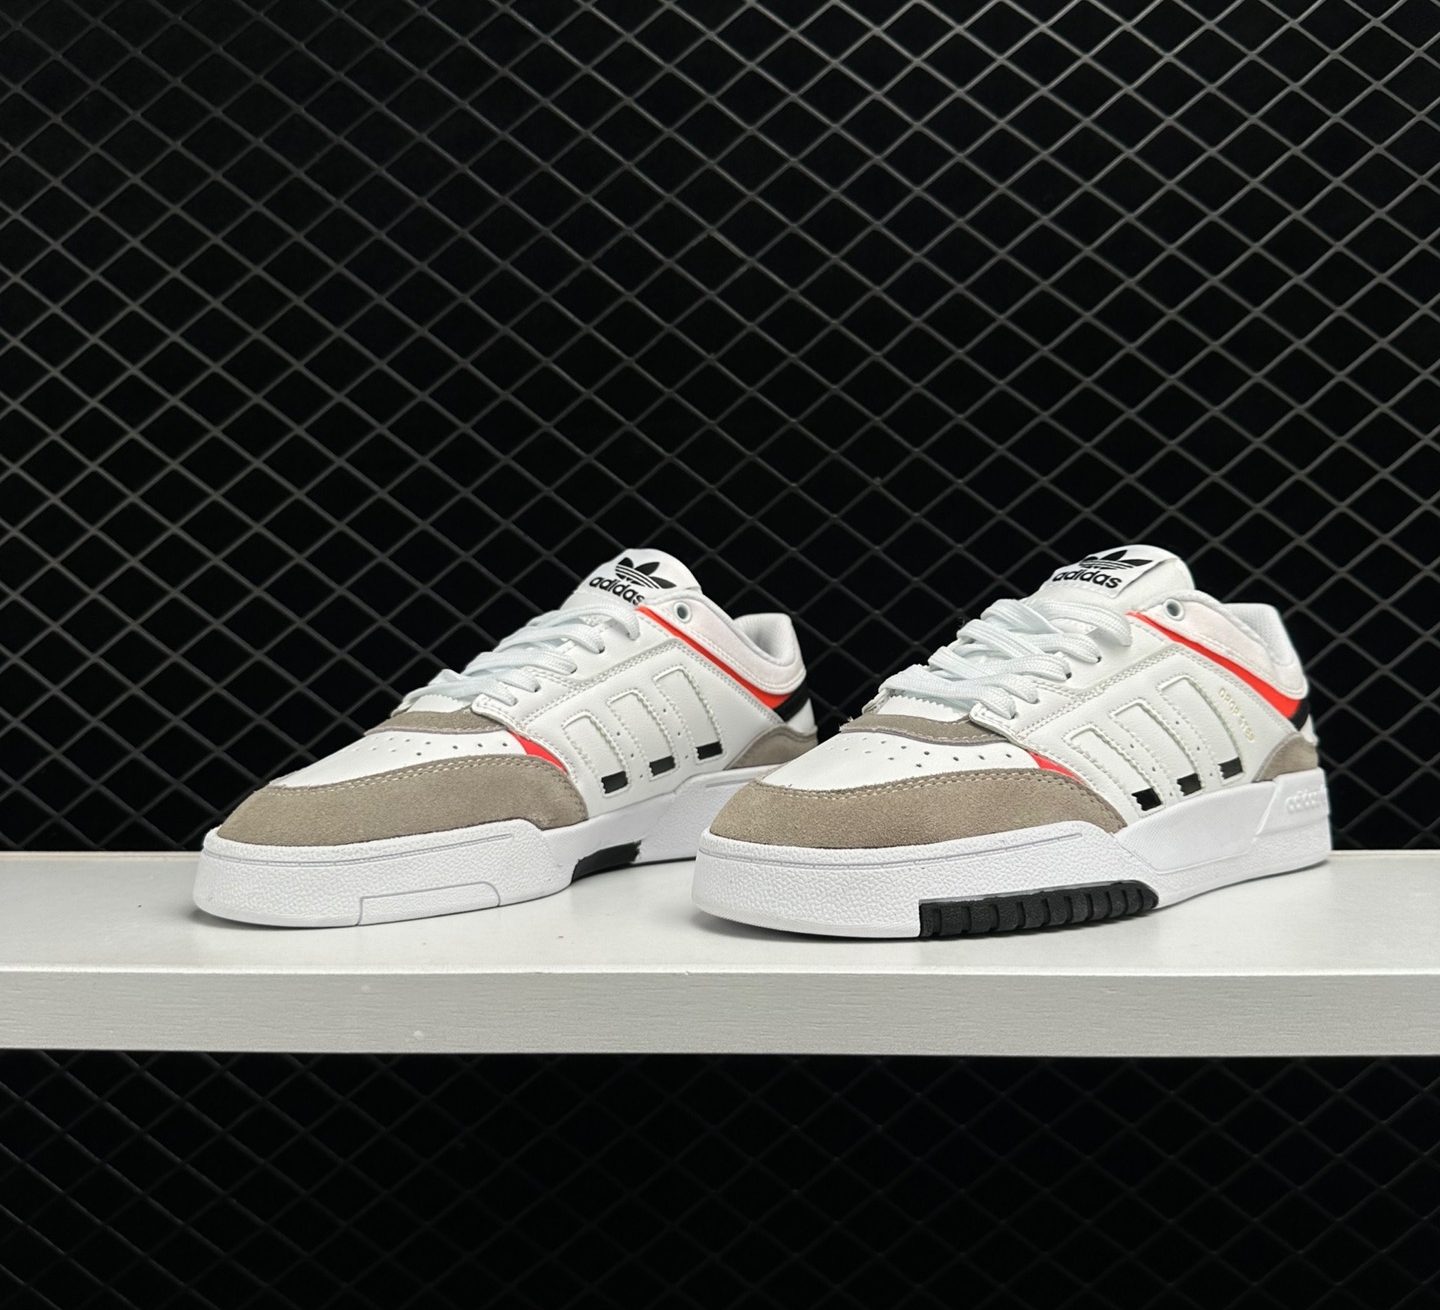 Adidas Originals Drop Step XL Low Sneakers - Off White/Navy/Black